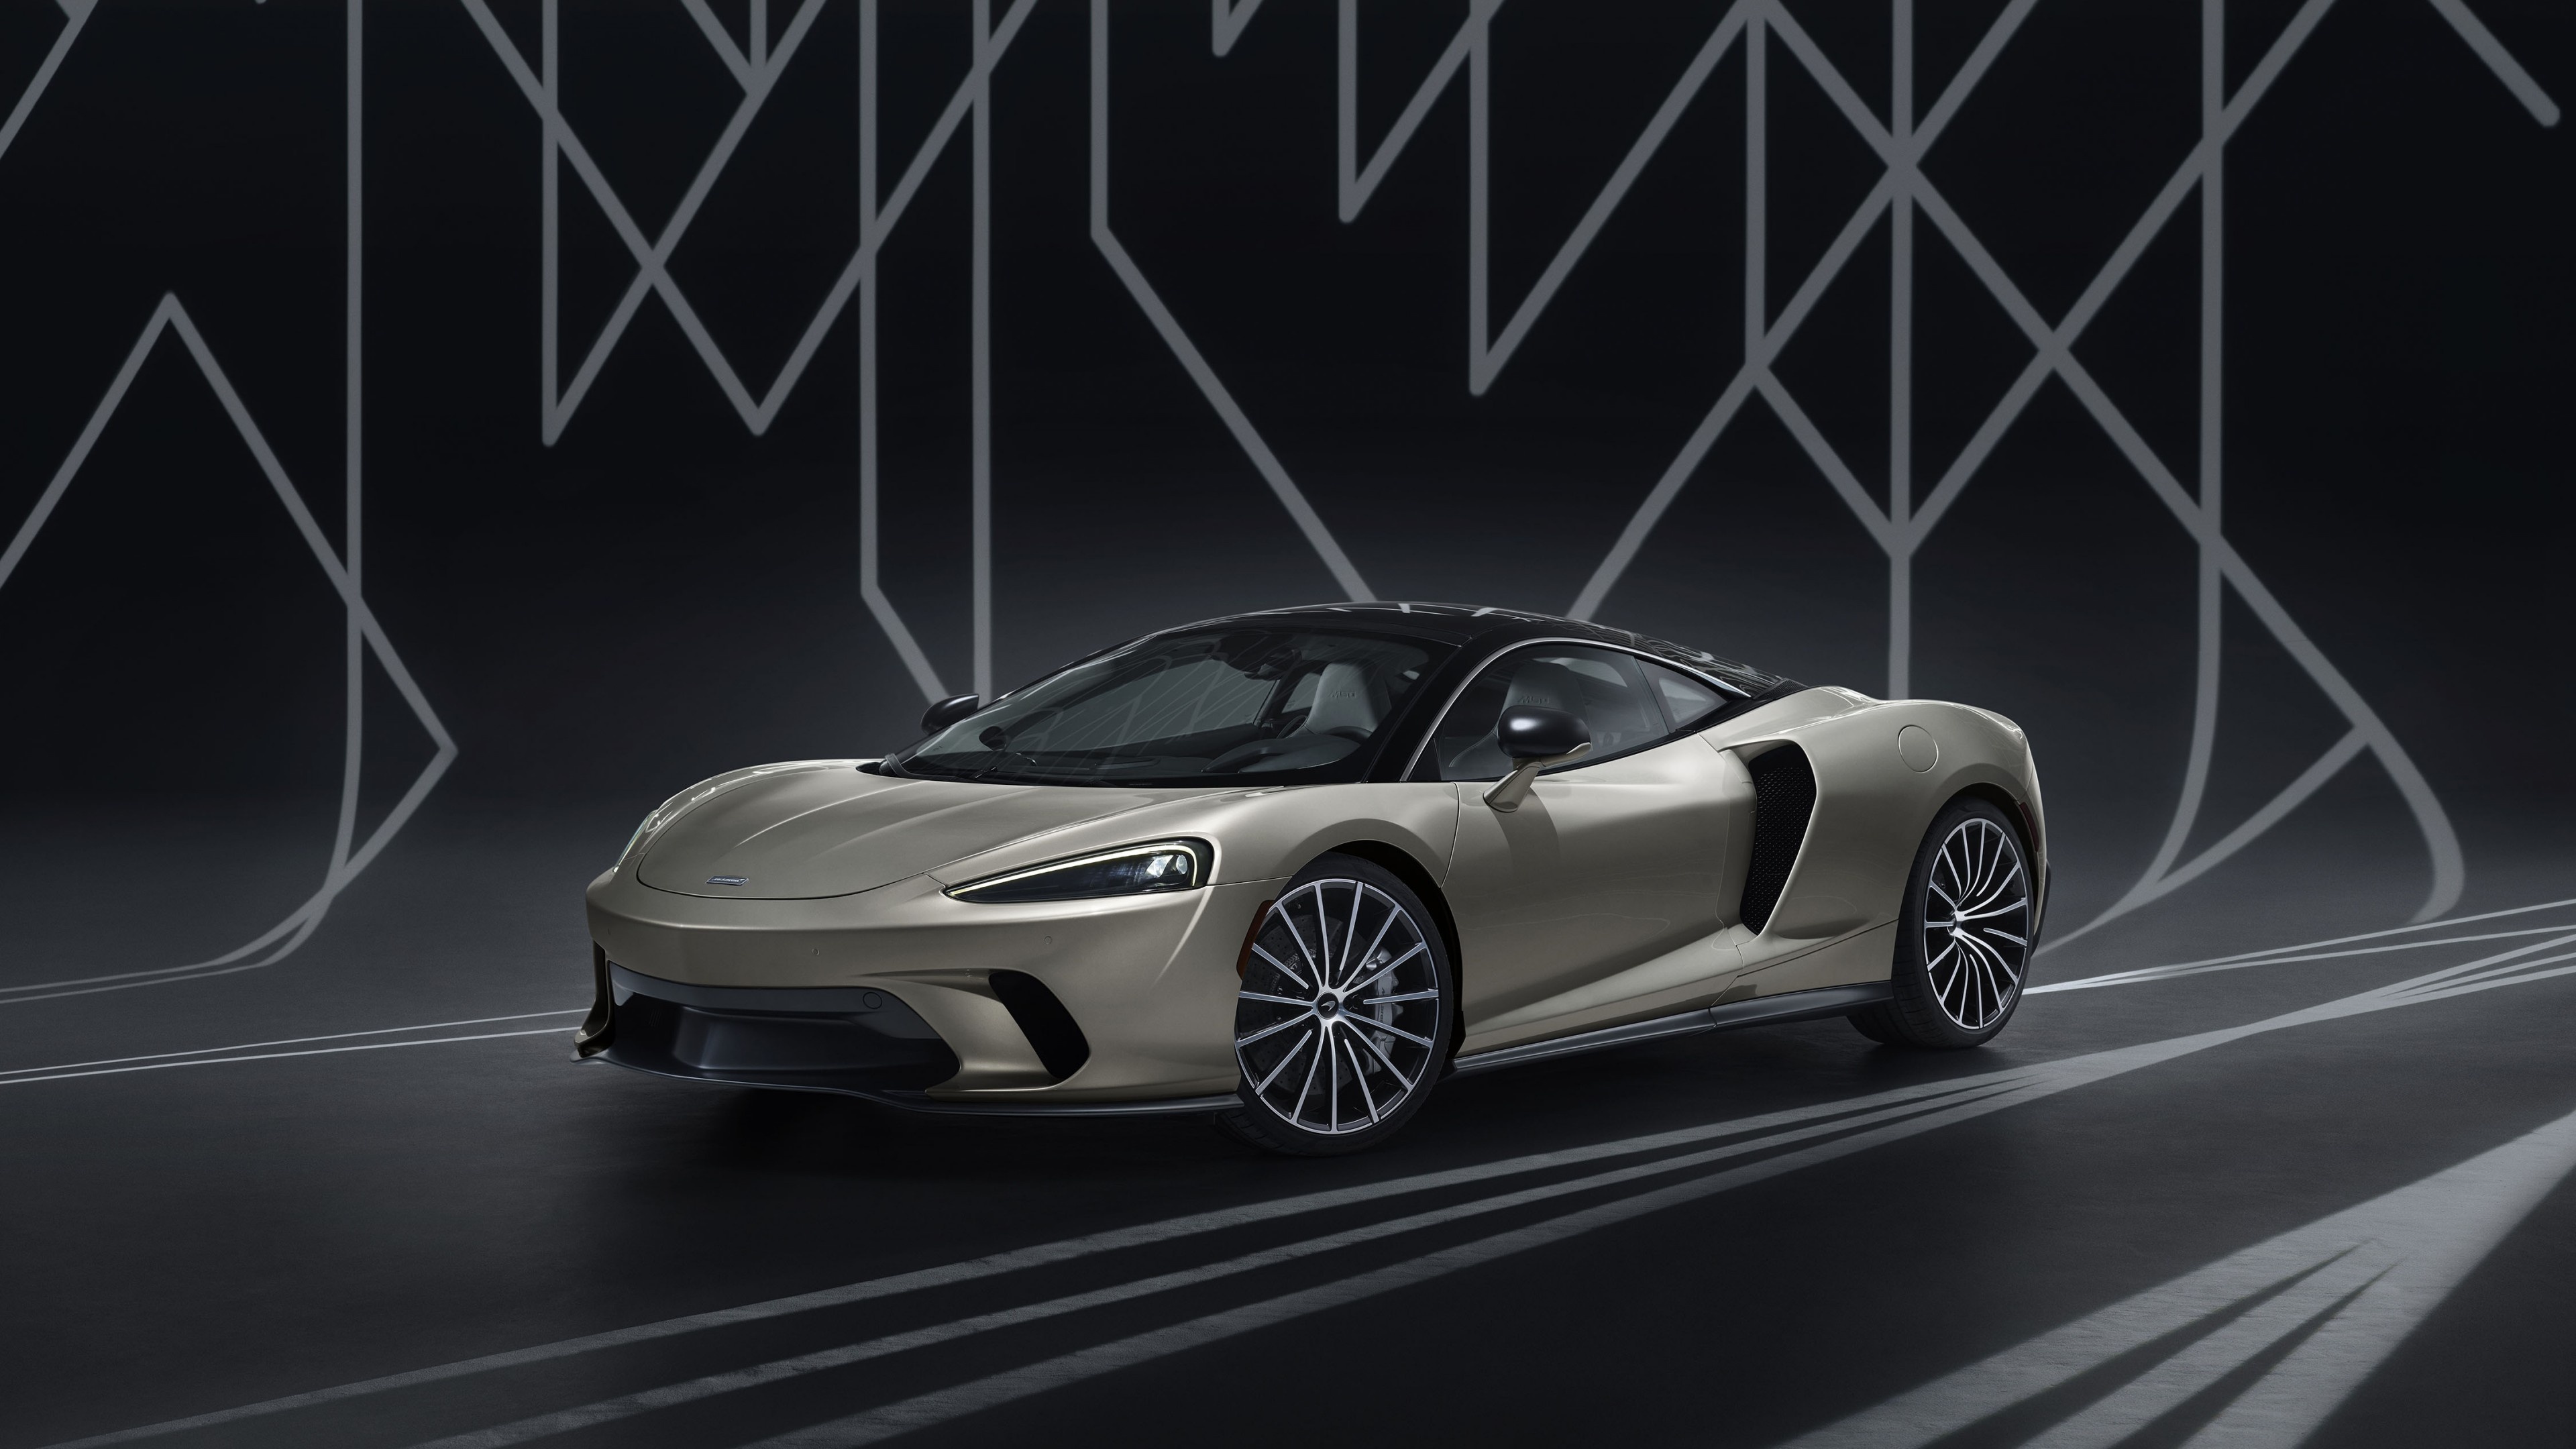 McLaren GT, Auto perfection, Exquisite design, Unbridled speed, 3840x2160 4K Desktop